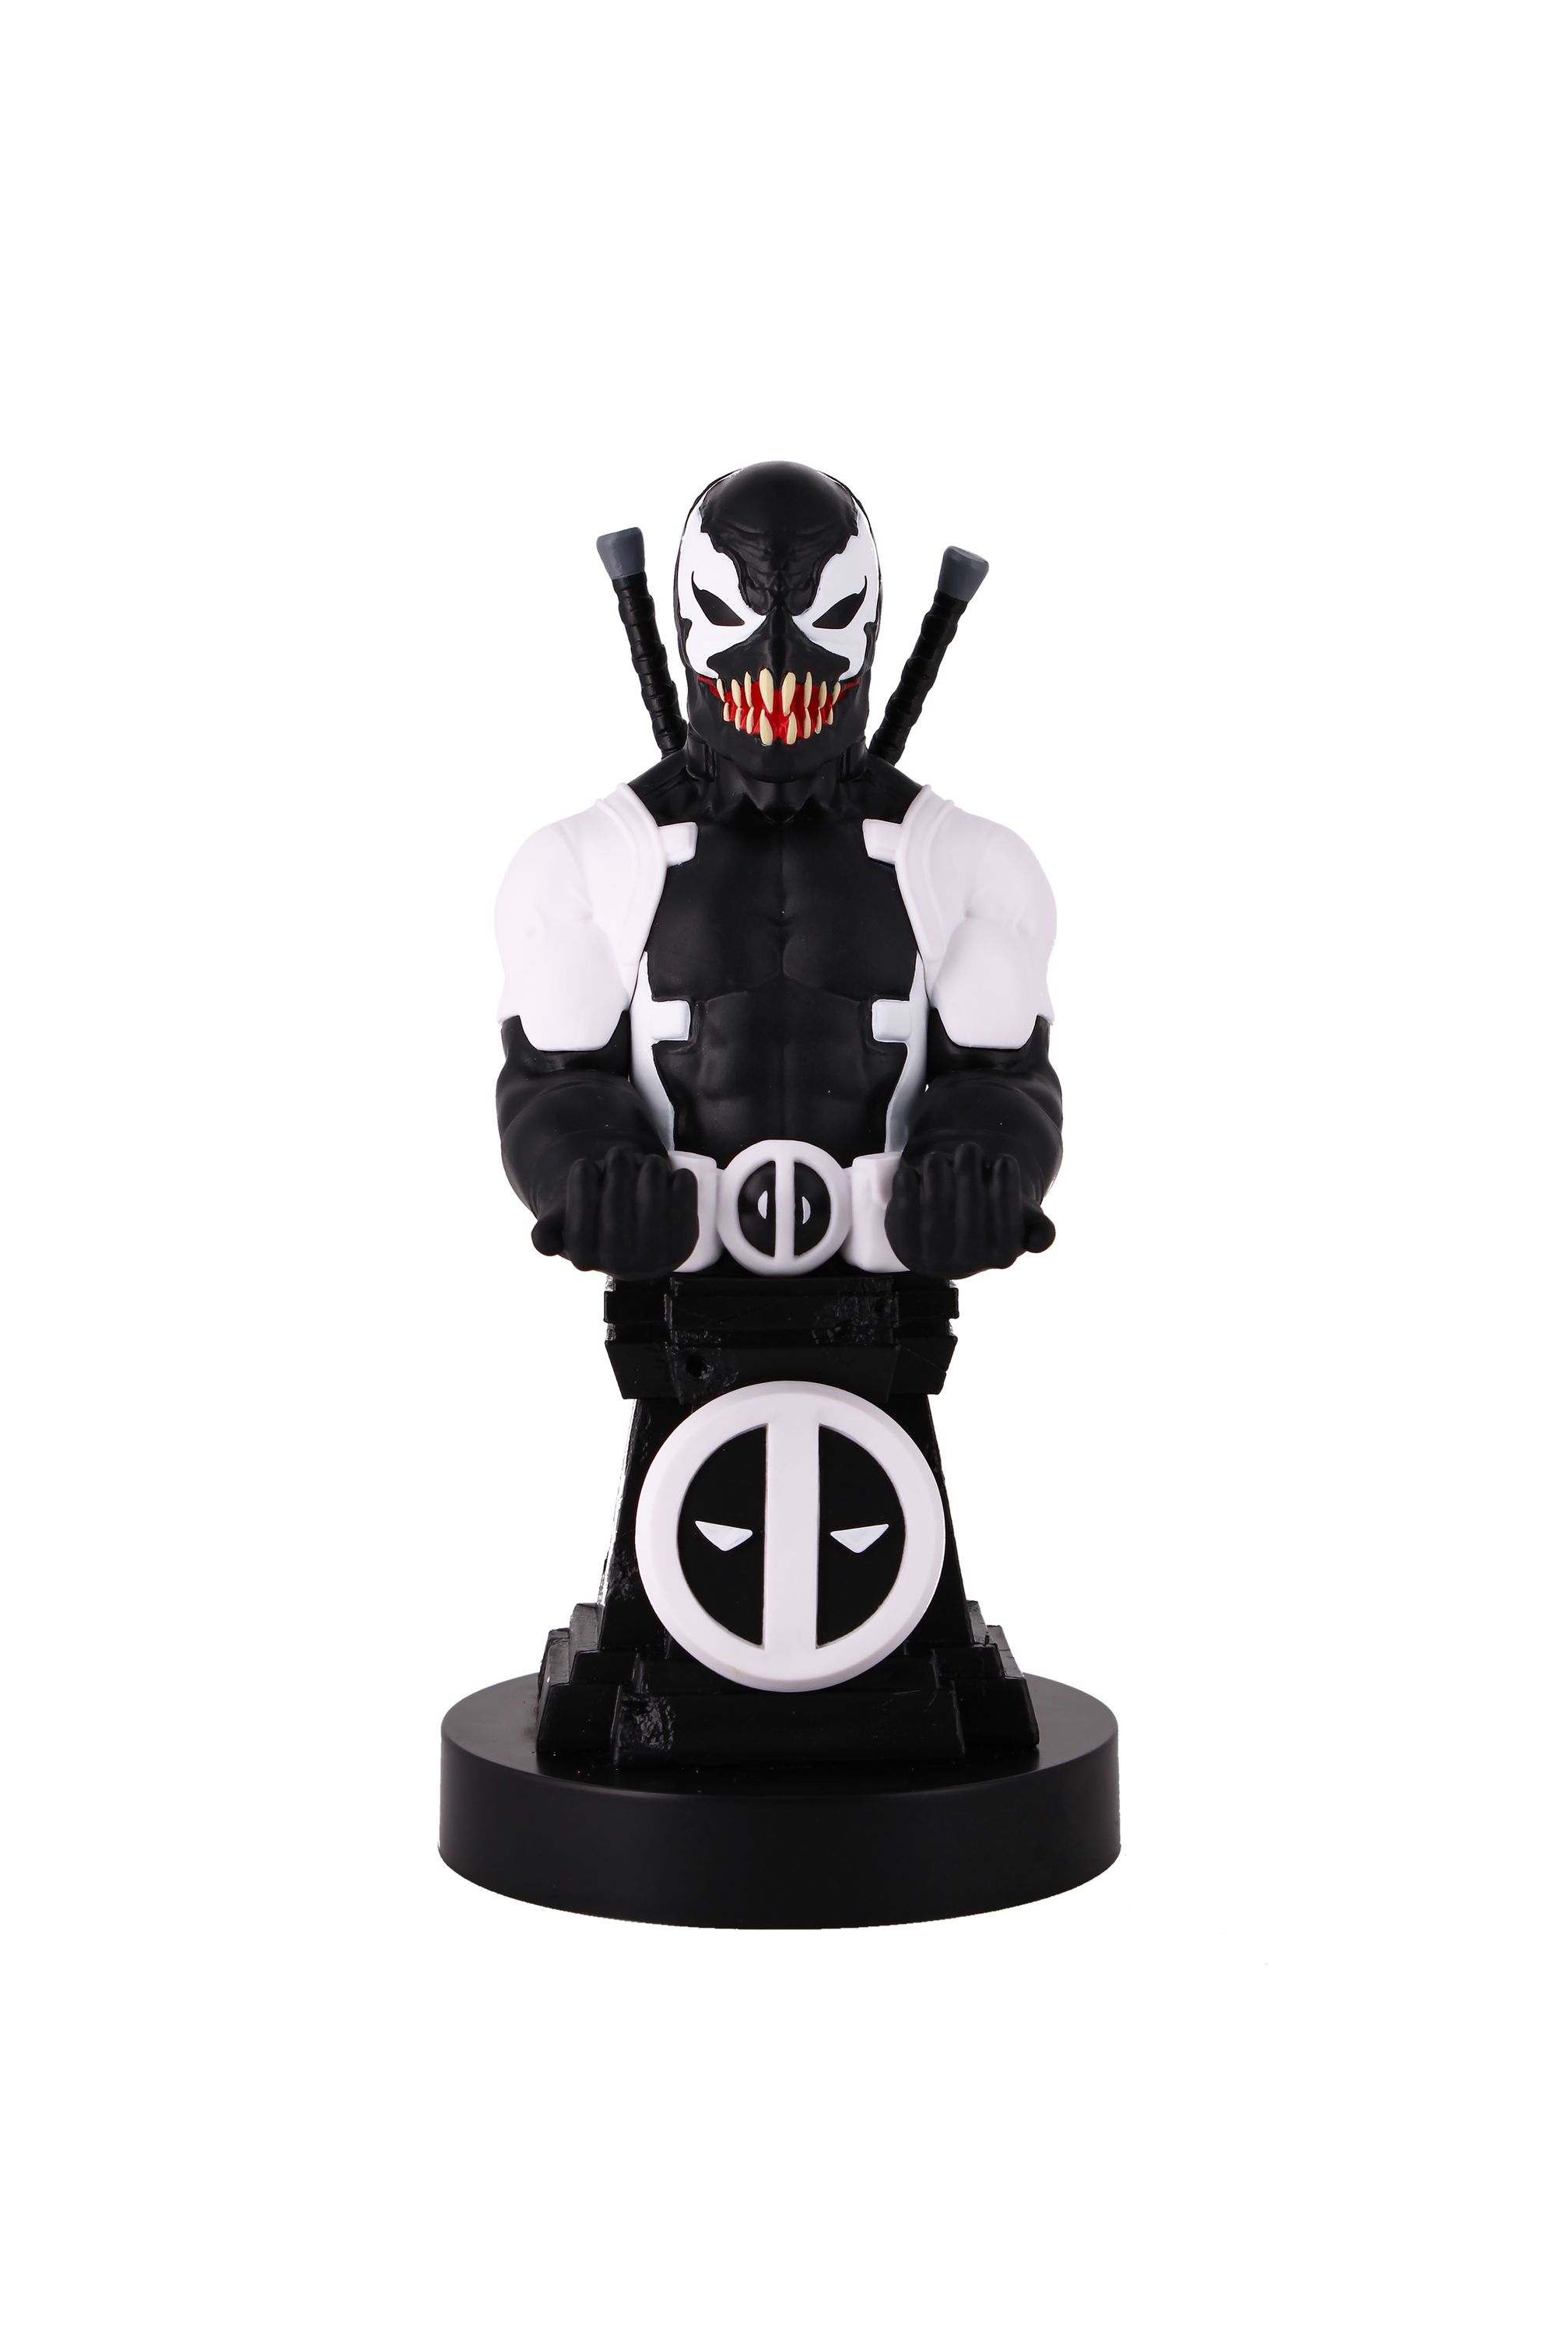 CABLE GUYS Venom Deadpool